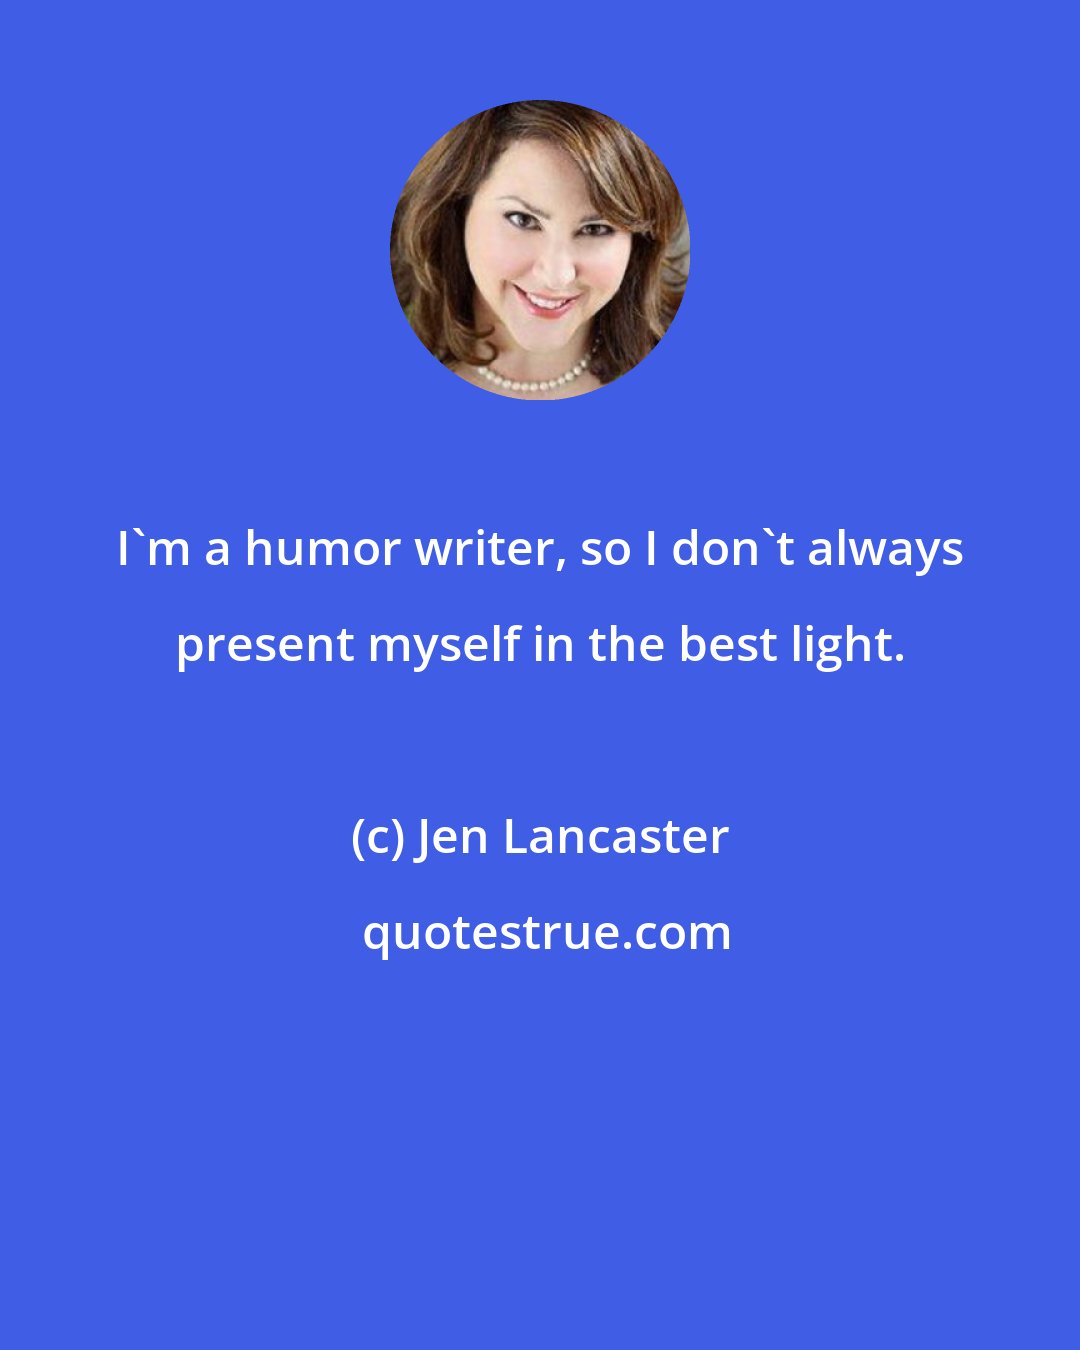 Jen Lancaster: I'm a humor writer, so I don't always present myself in the best light.